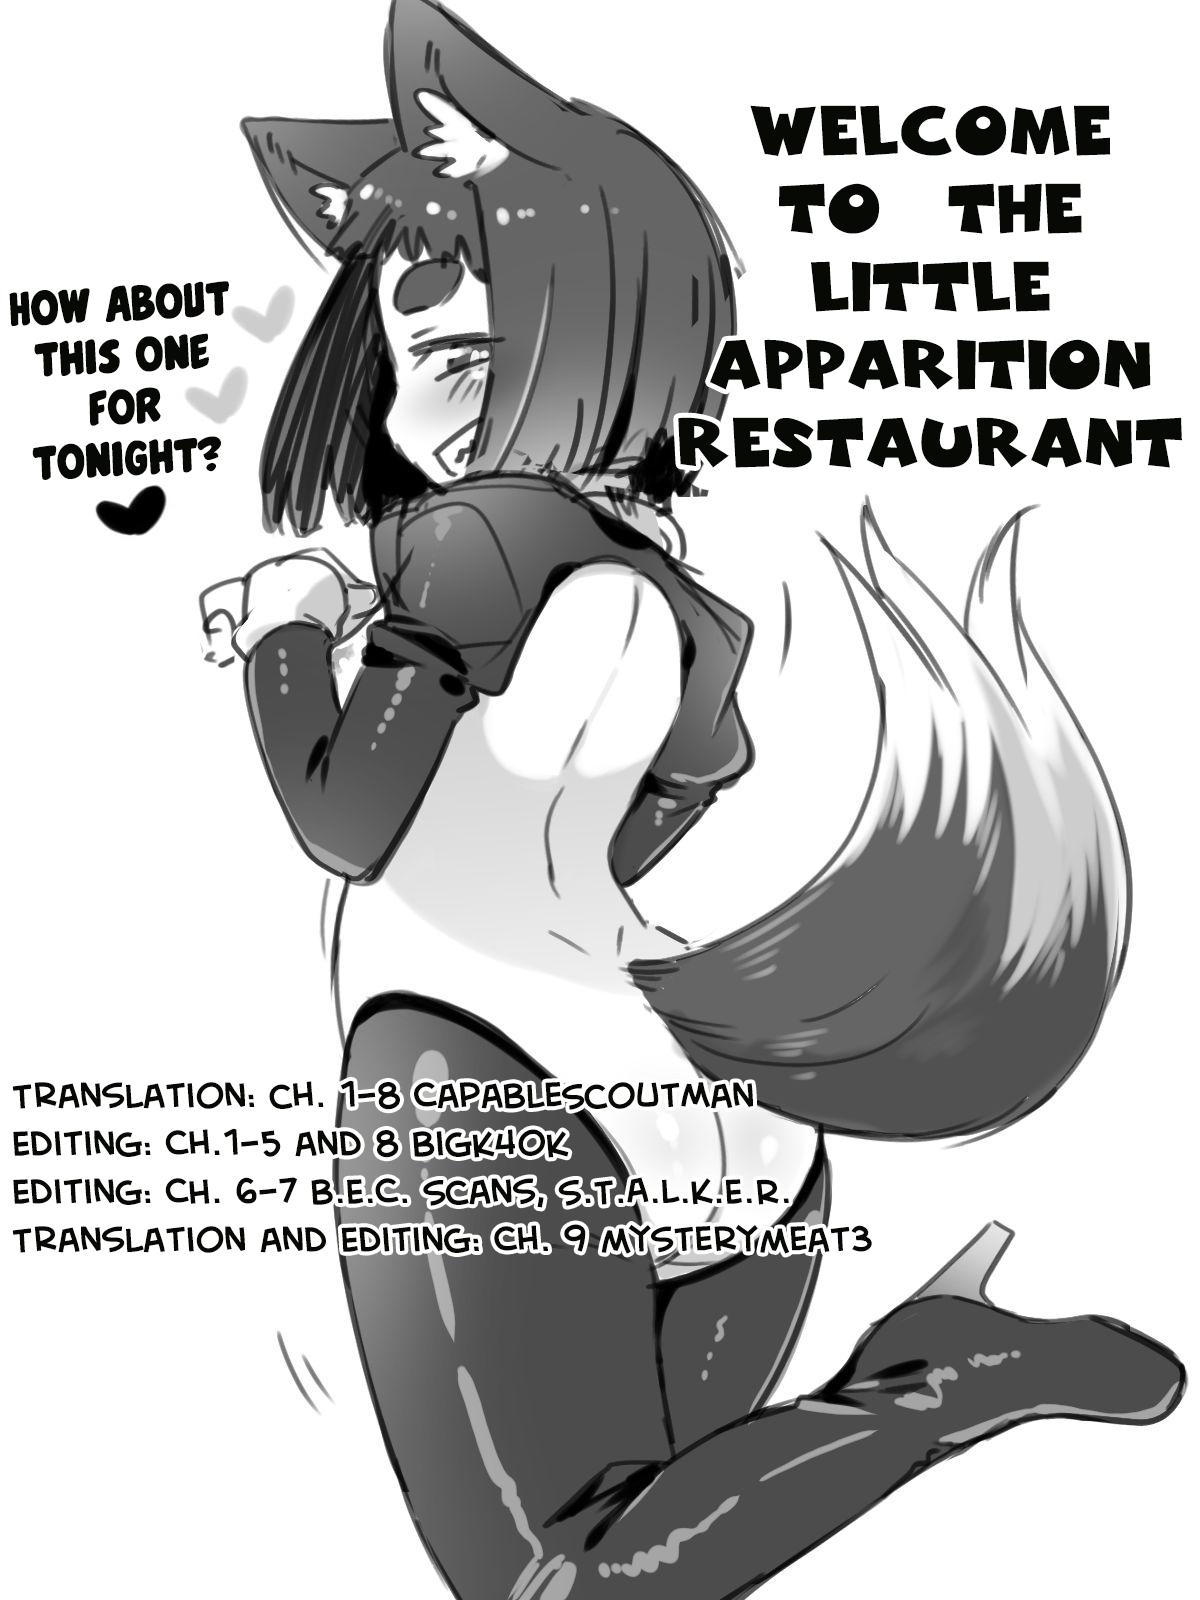 Bukkake Youkai Koryouriya ni Youkoso - Welcome to apparition small restaurant Sexcams - Page 218